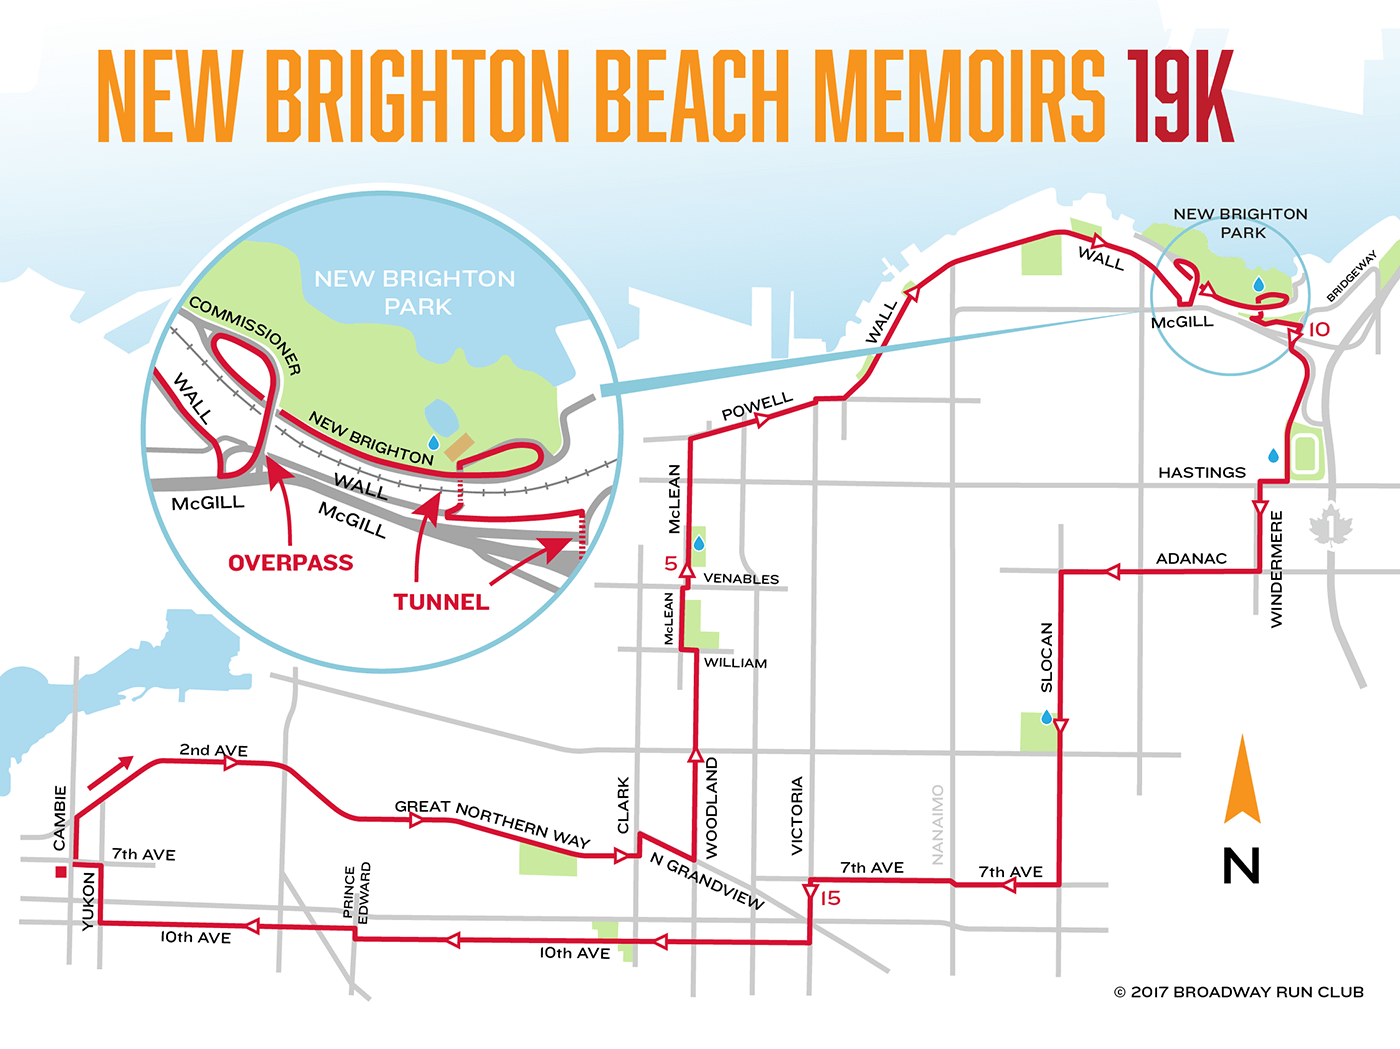 New Brighton Beach Memoirs 19k map